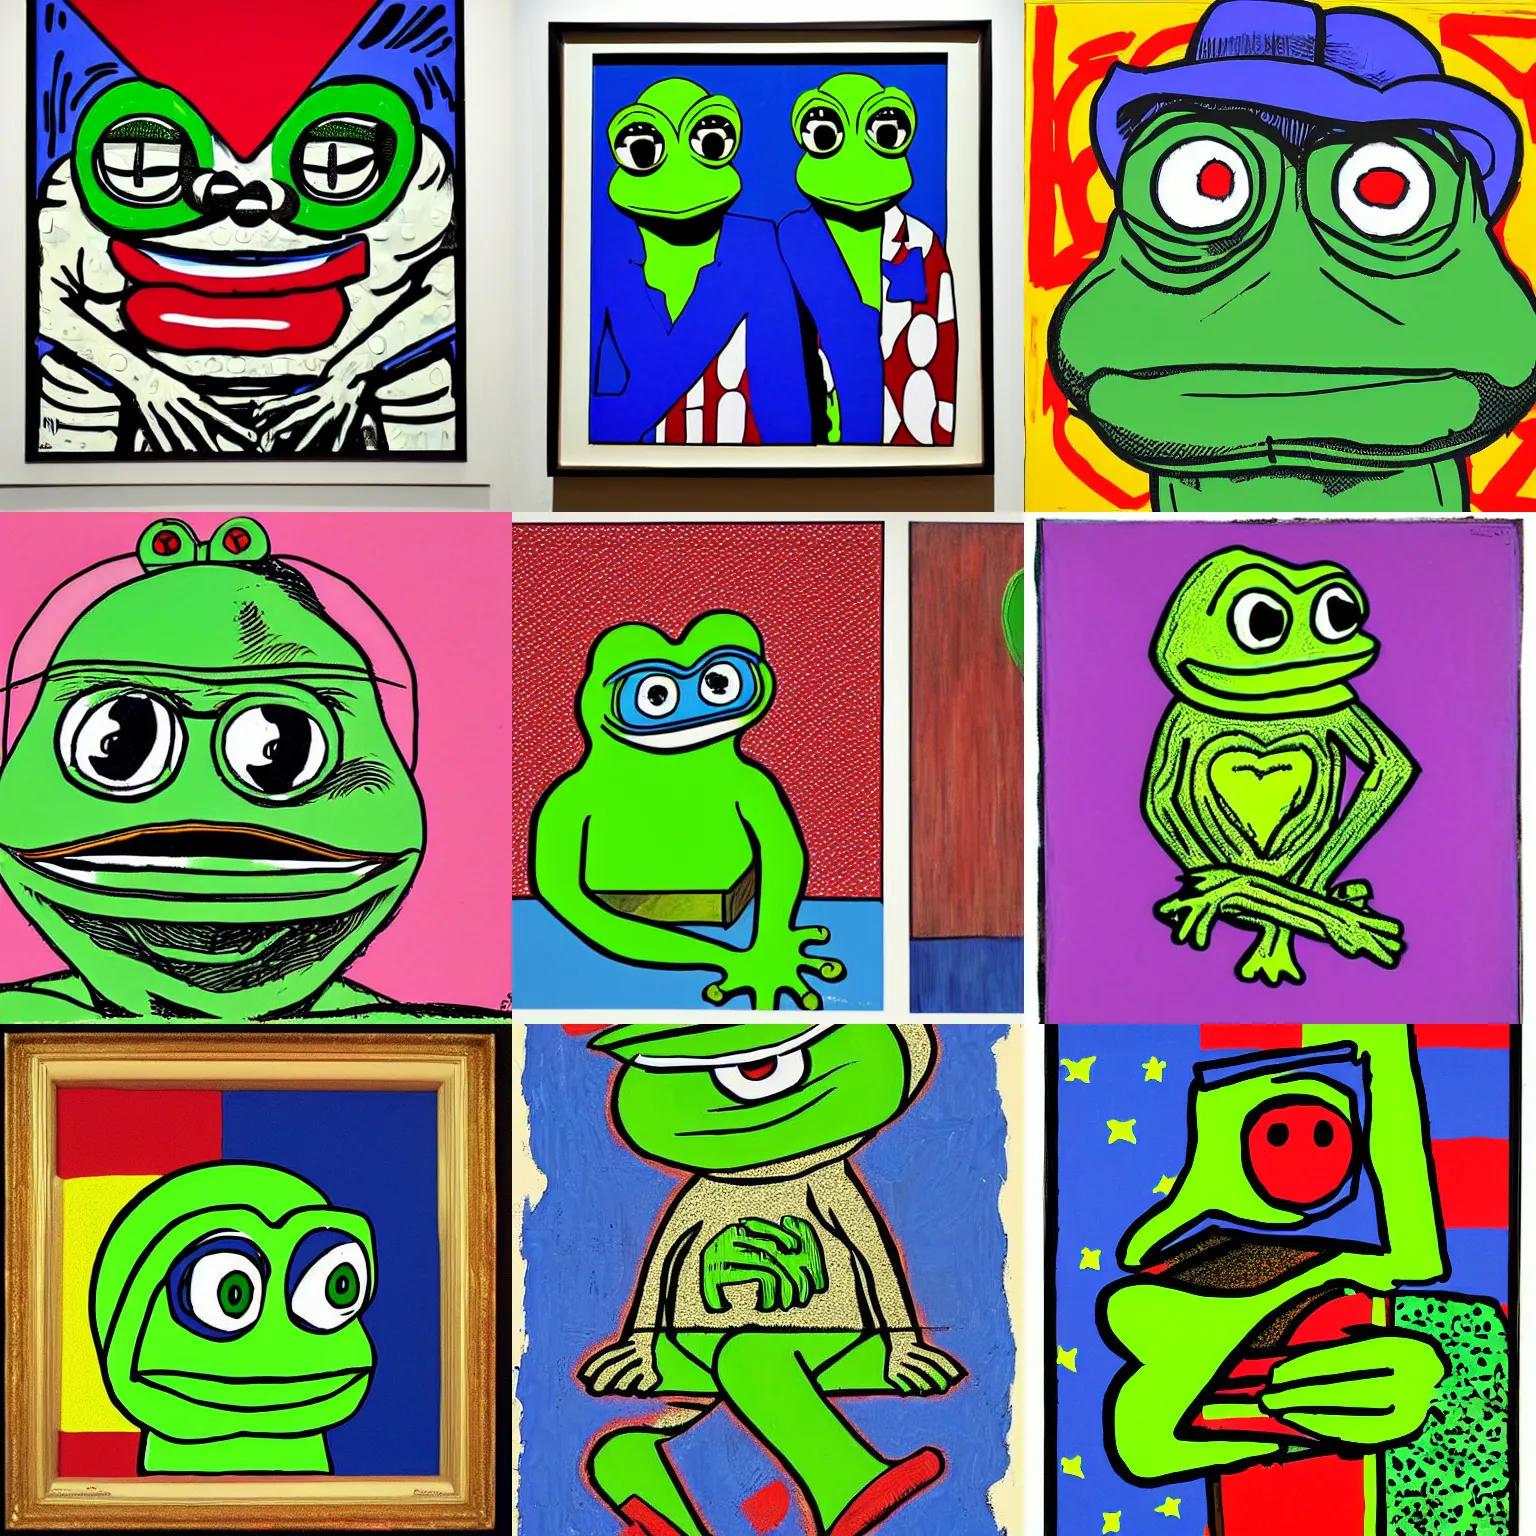 Prompt: pepe the frog,pop art masterpiece by Jasper Johns and Matt Furie,